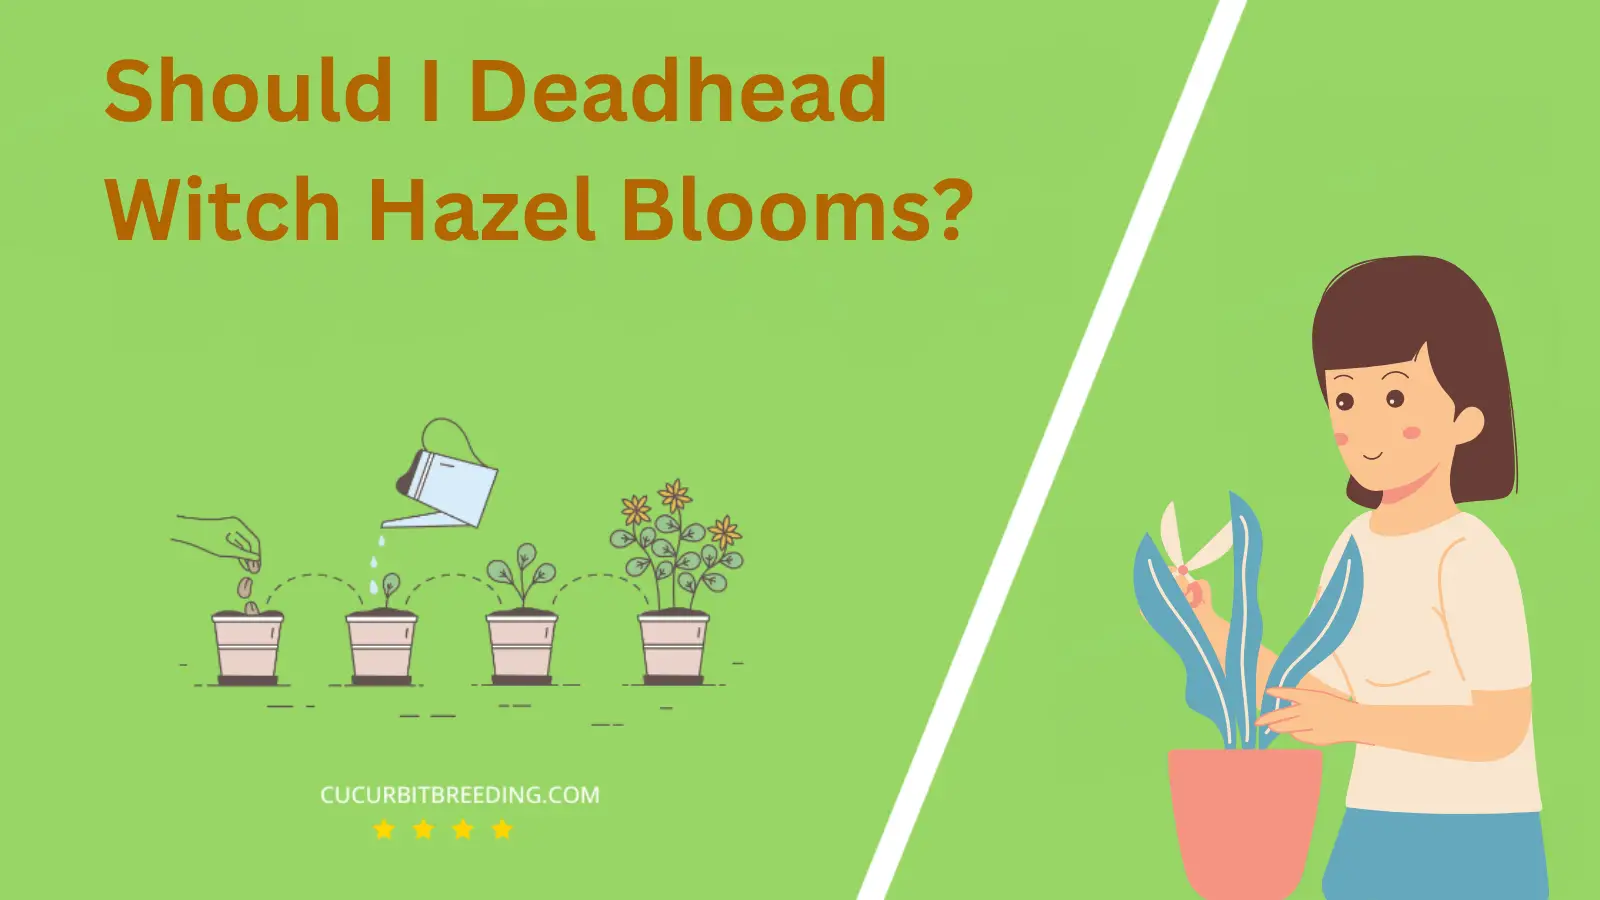 Should I Deadhead Witch Hazel Blooms?